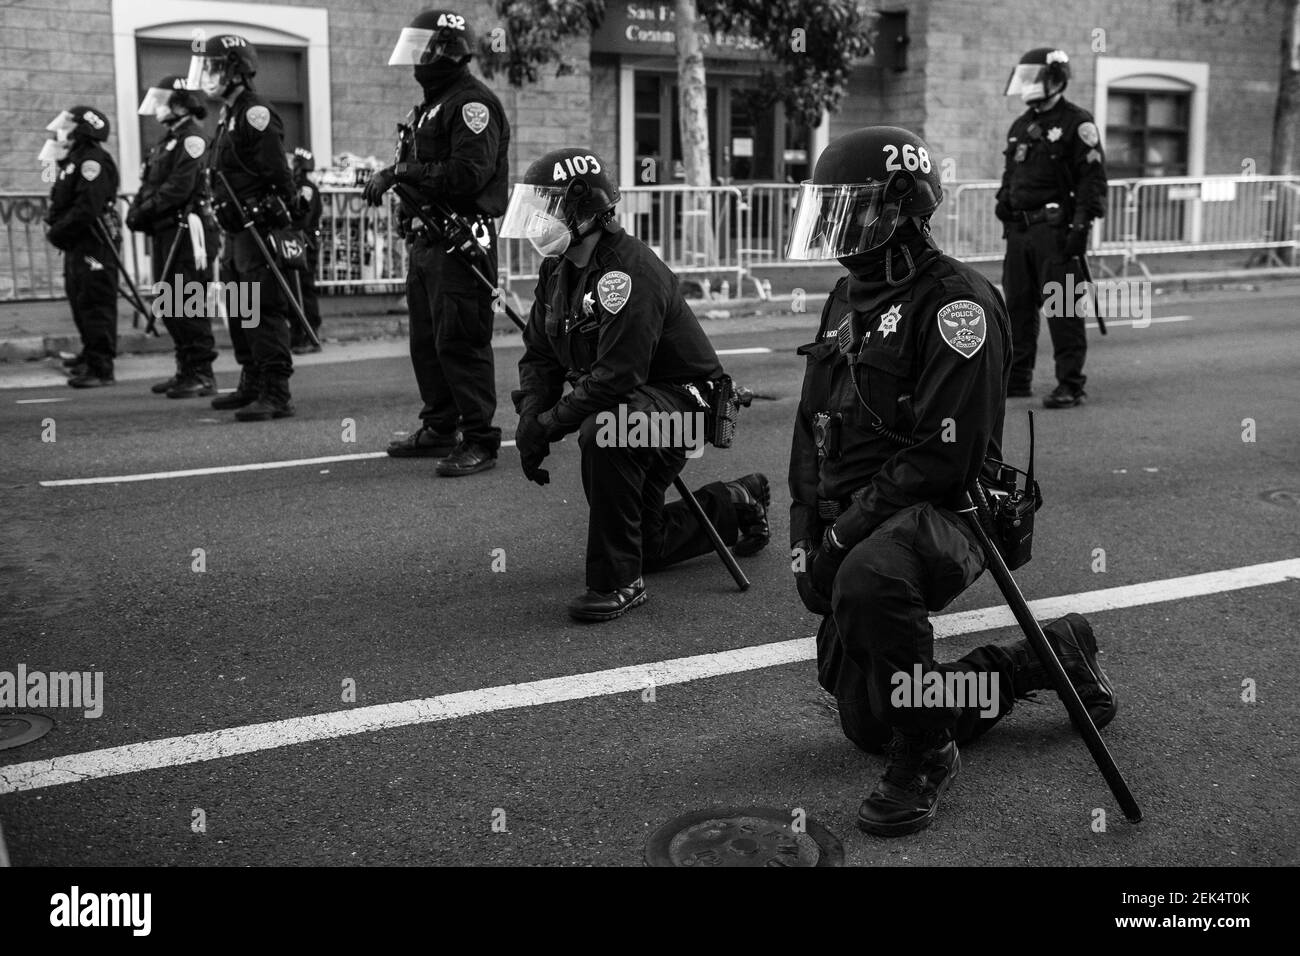 SAN FRANCISCO, CA- JUNE 3: San Francisco Police Officers kneel at ...